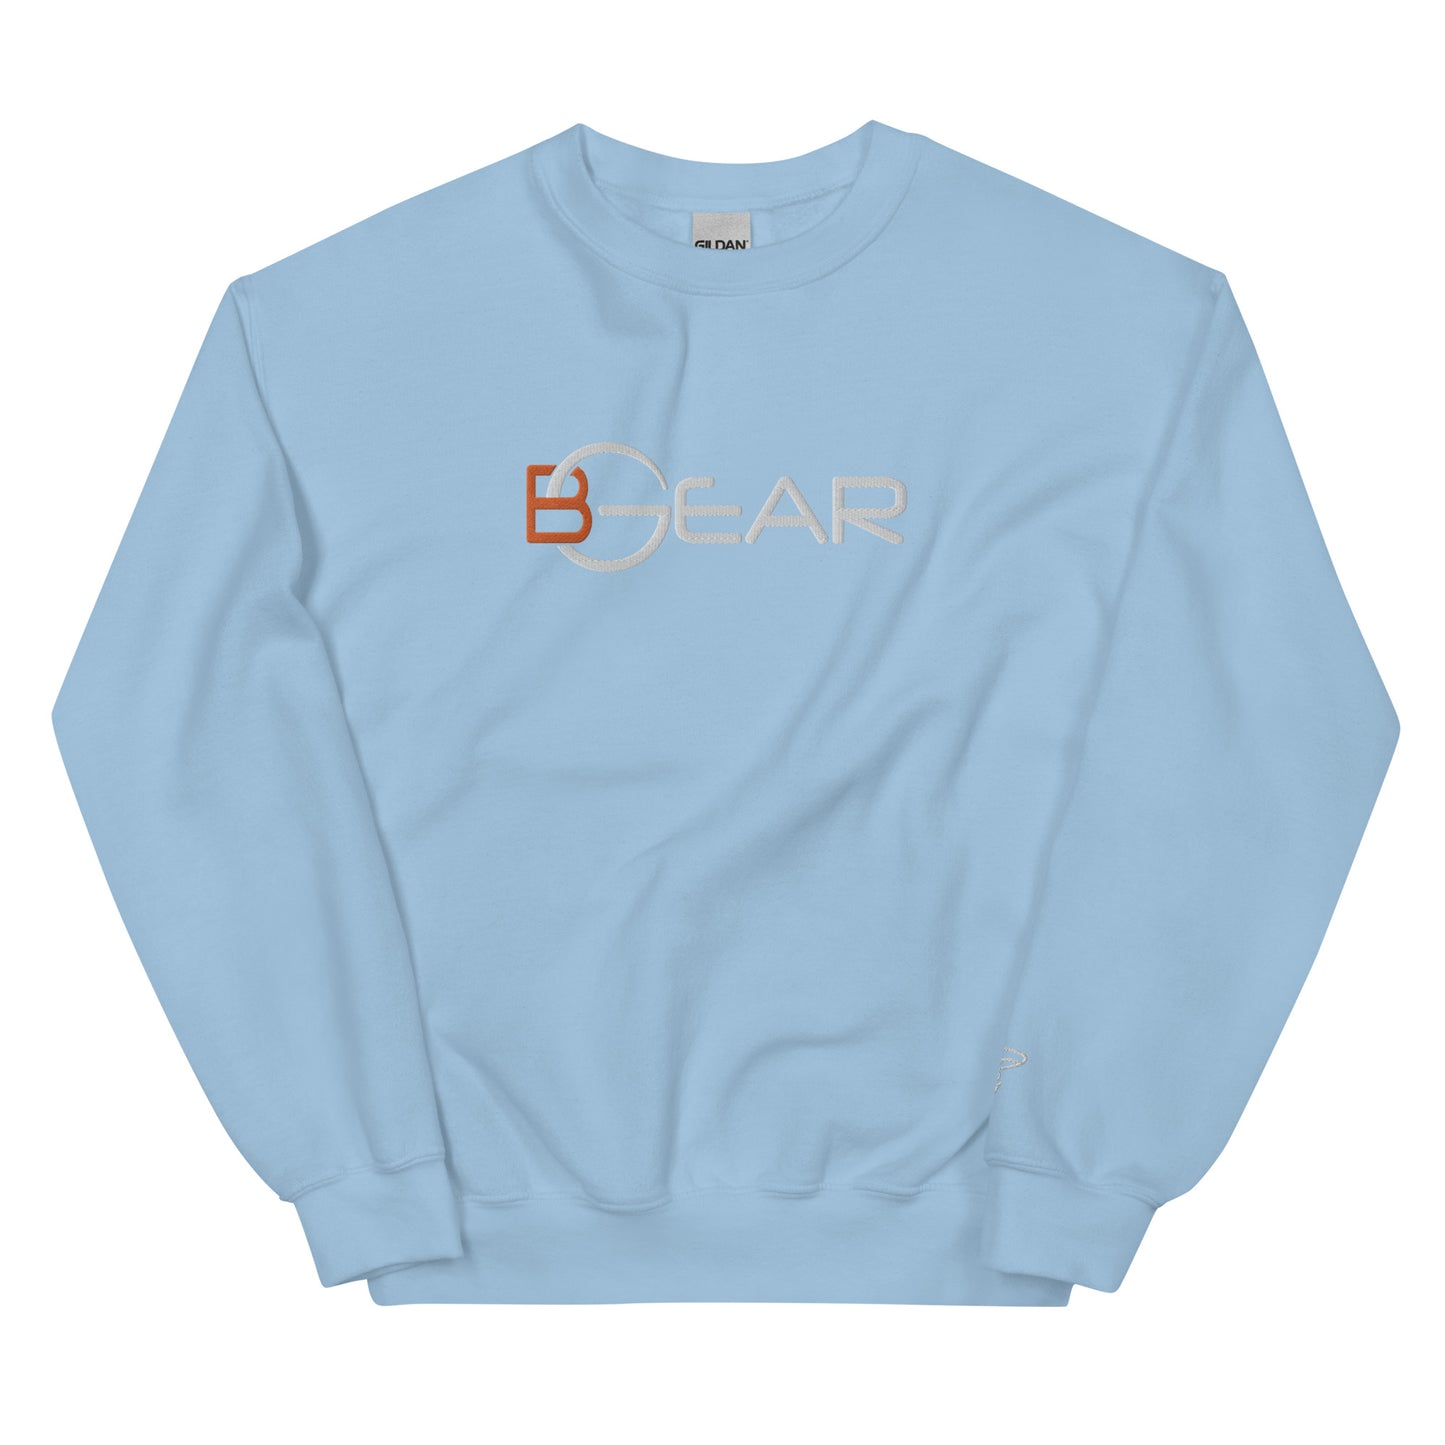 BGear Long Sleeve Crew Neck Sweatshirt - Center BGear Logo